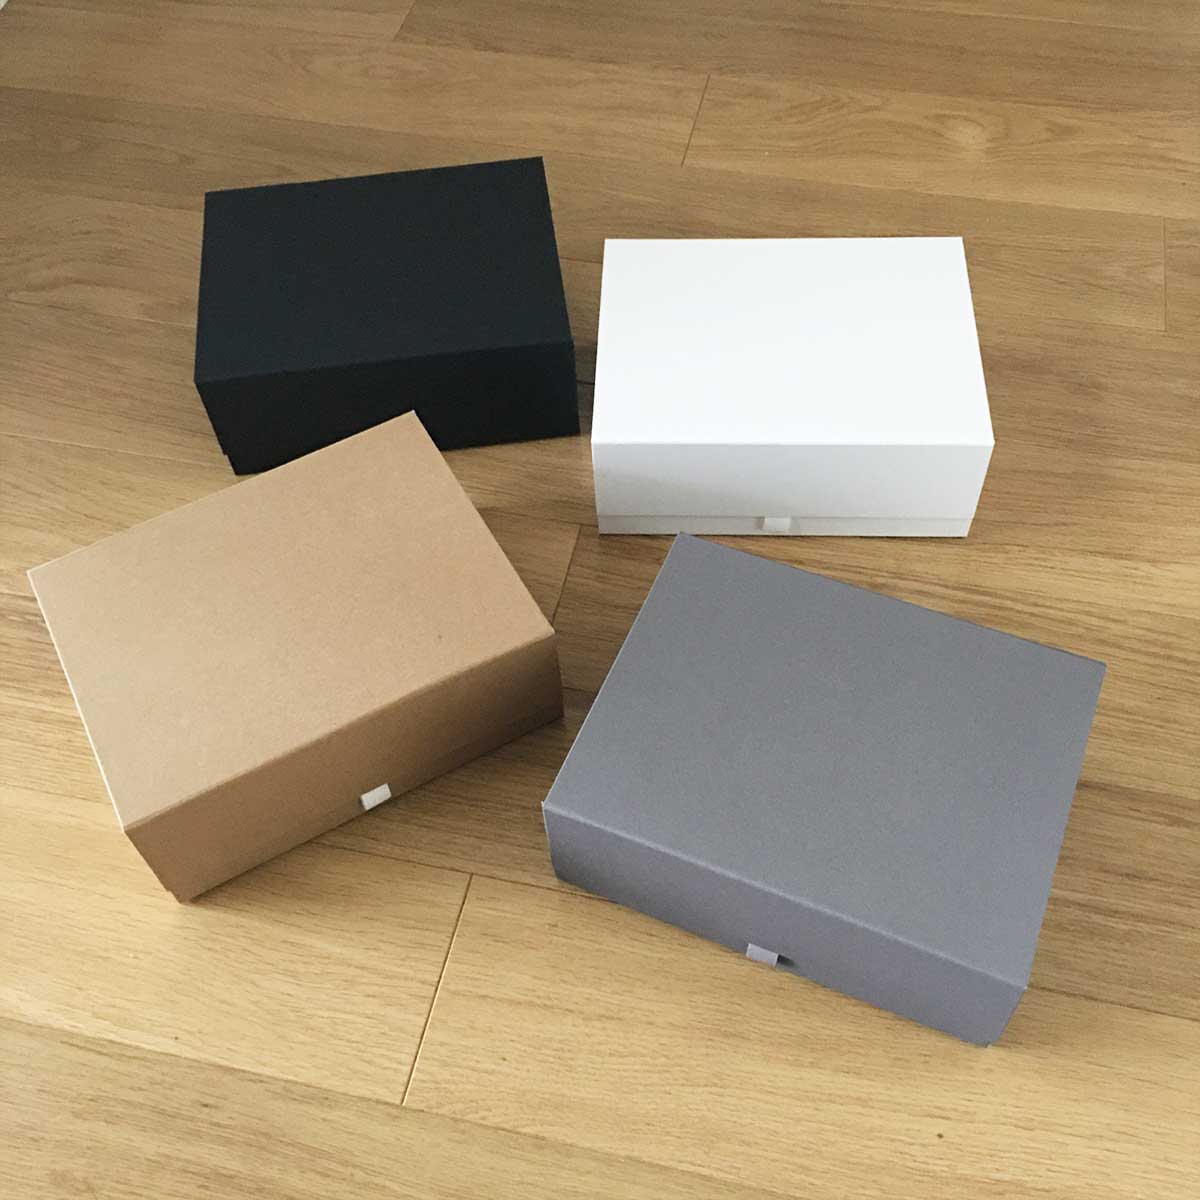 Personalised Precious Memories Keepsake Memory Box (White, Grey, Kraft)